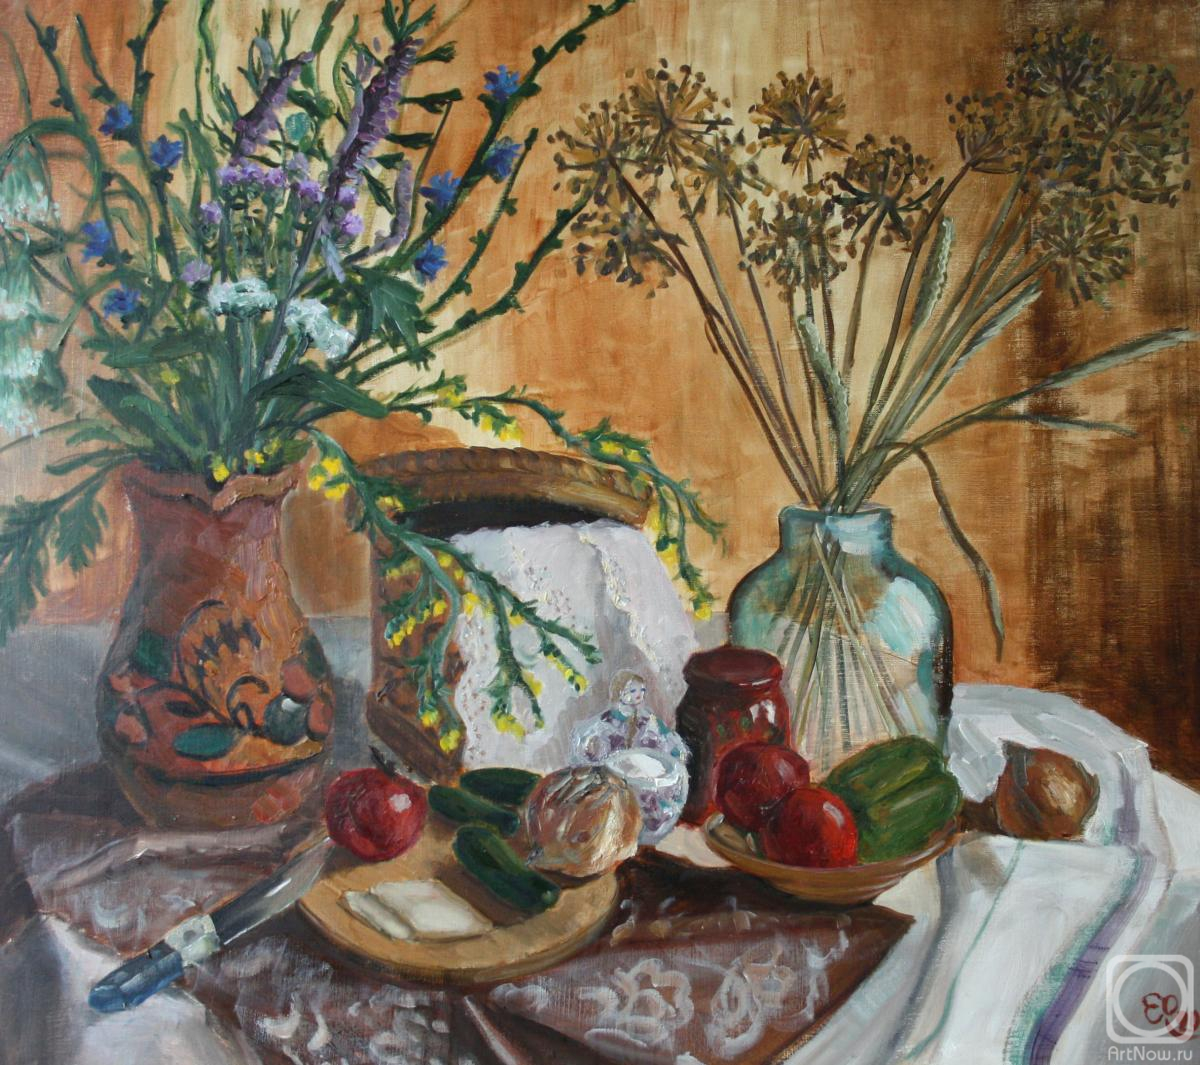 Olshevskaya Elena. Still life with wild flowers and vegetables